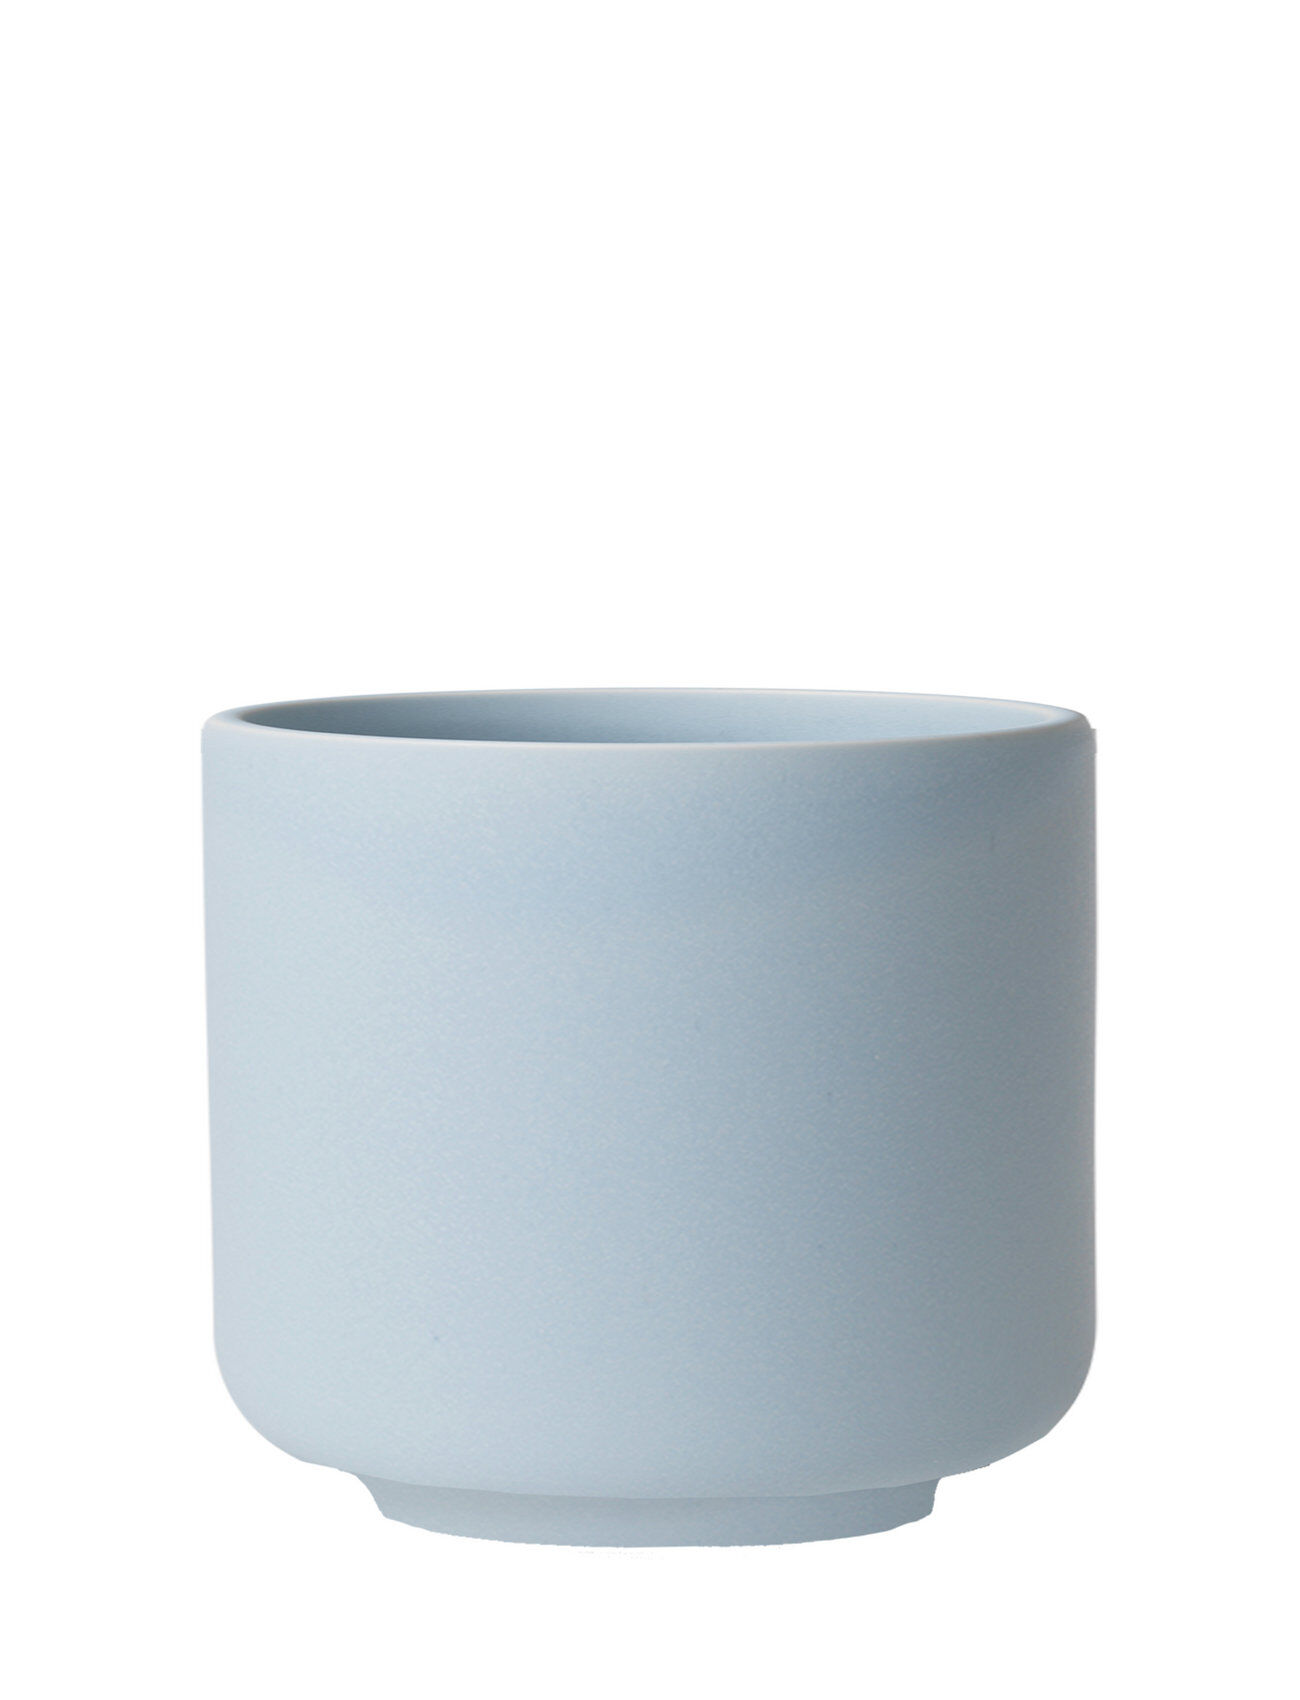 Louise Roe Ceramic Pisu #18 Egg Cup Home Tableware Bowls Egg Cups Blå Louise Roe